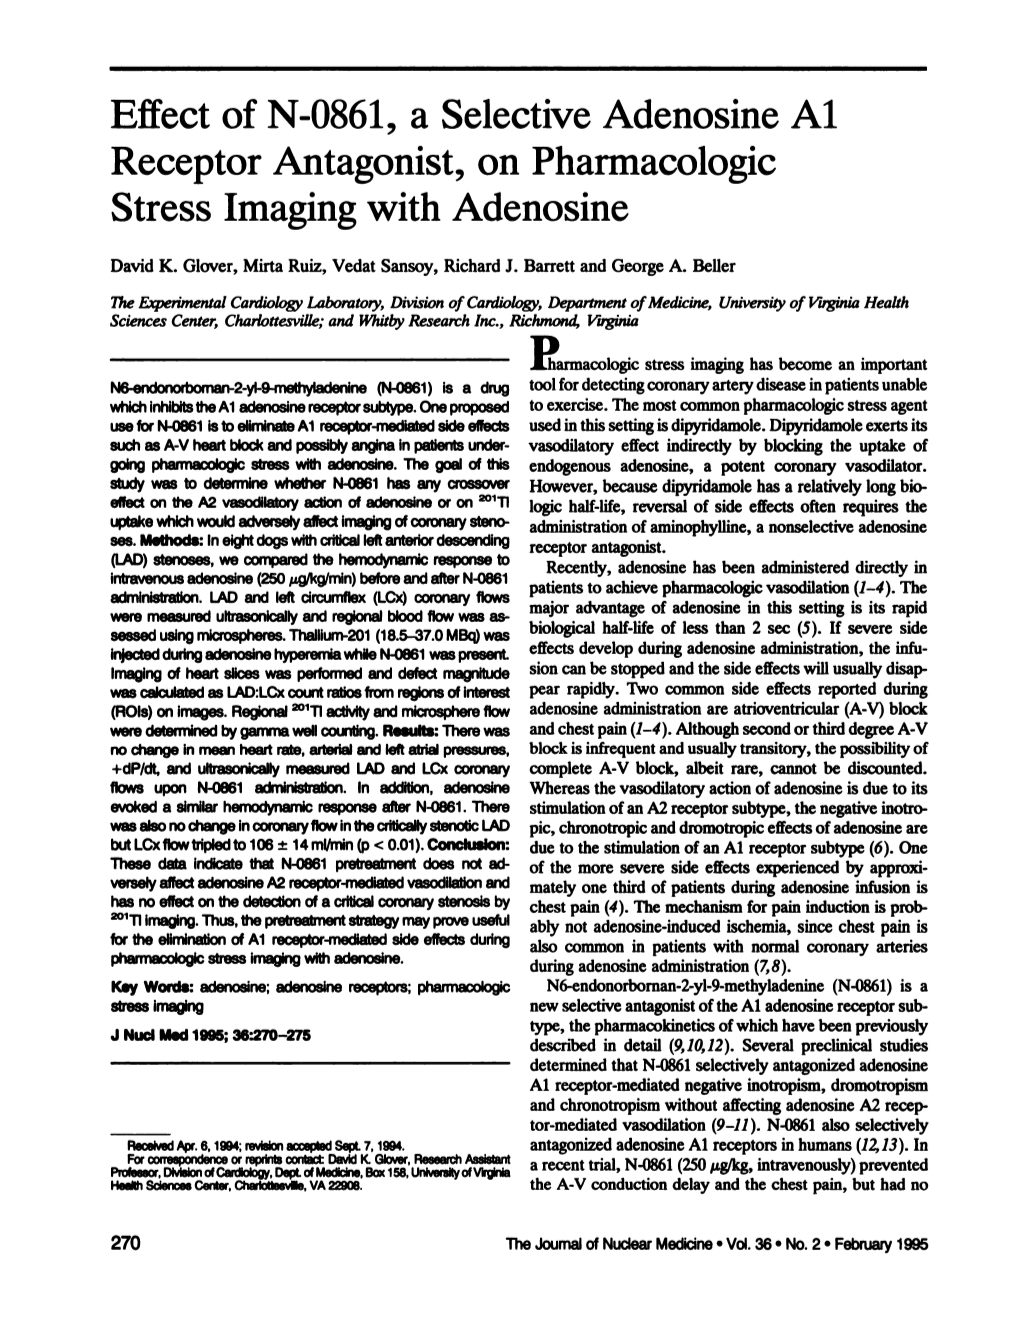 Effect of N-0861, a Selective Adenosine Al Receptor Antagonist, on Pharmacologie Stress Imaging with Adenosine